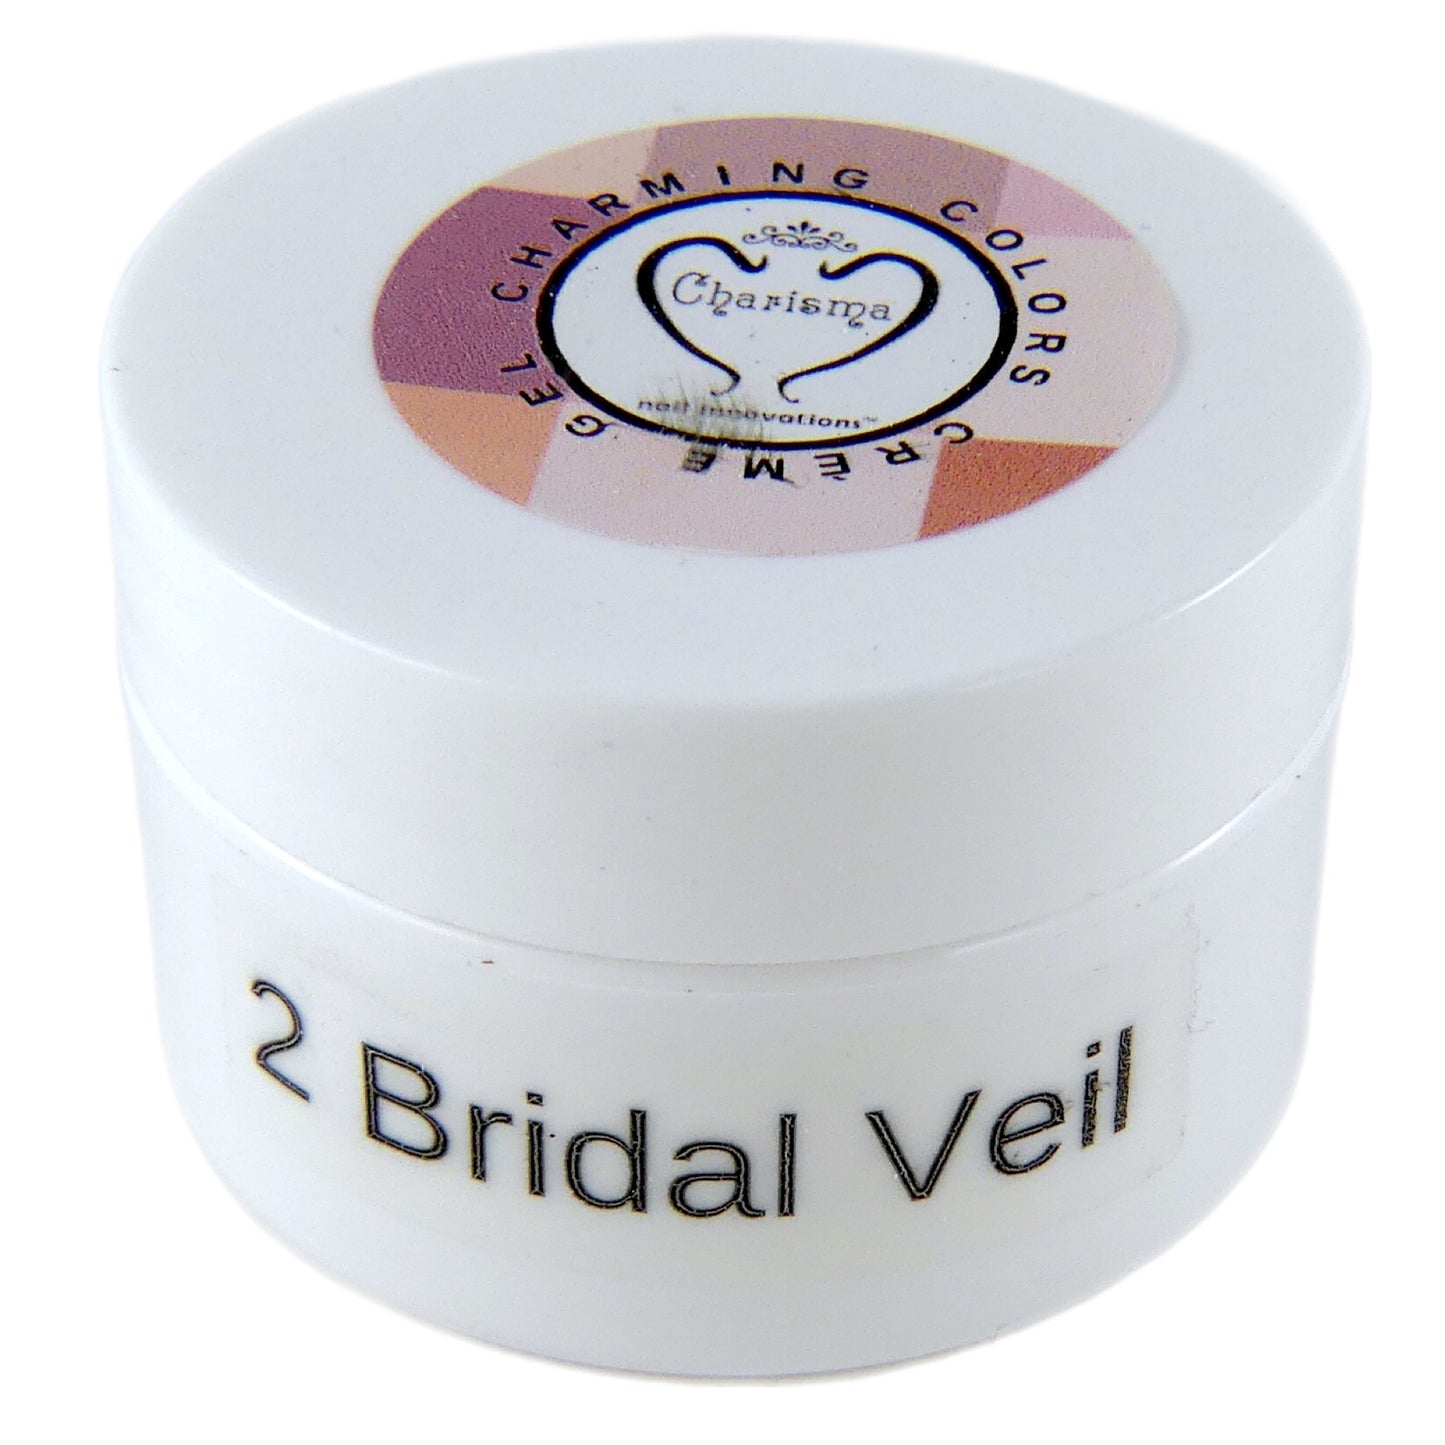 Builder Gel (Bridal Veil #2) 1/2 oz - My Little Nail Art Shop